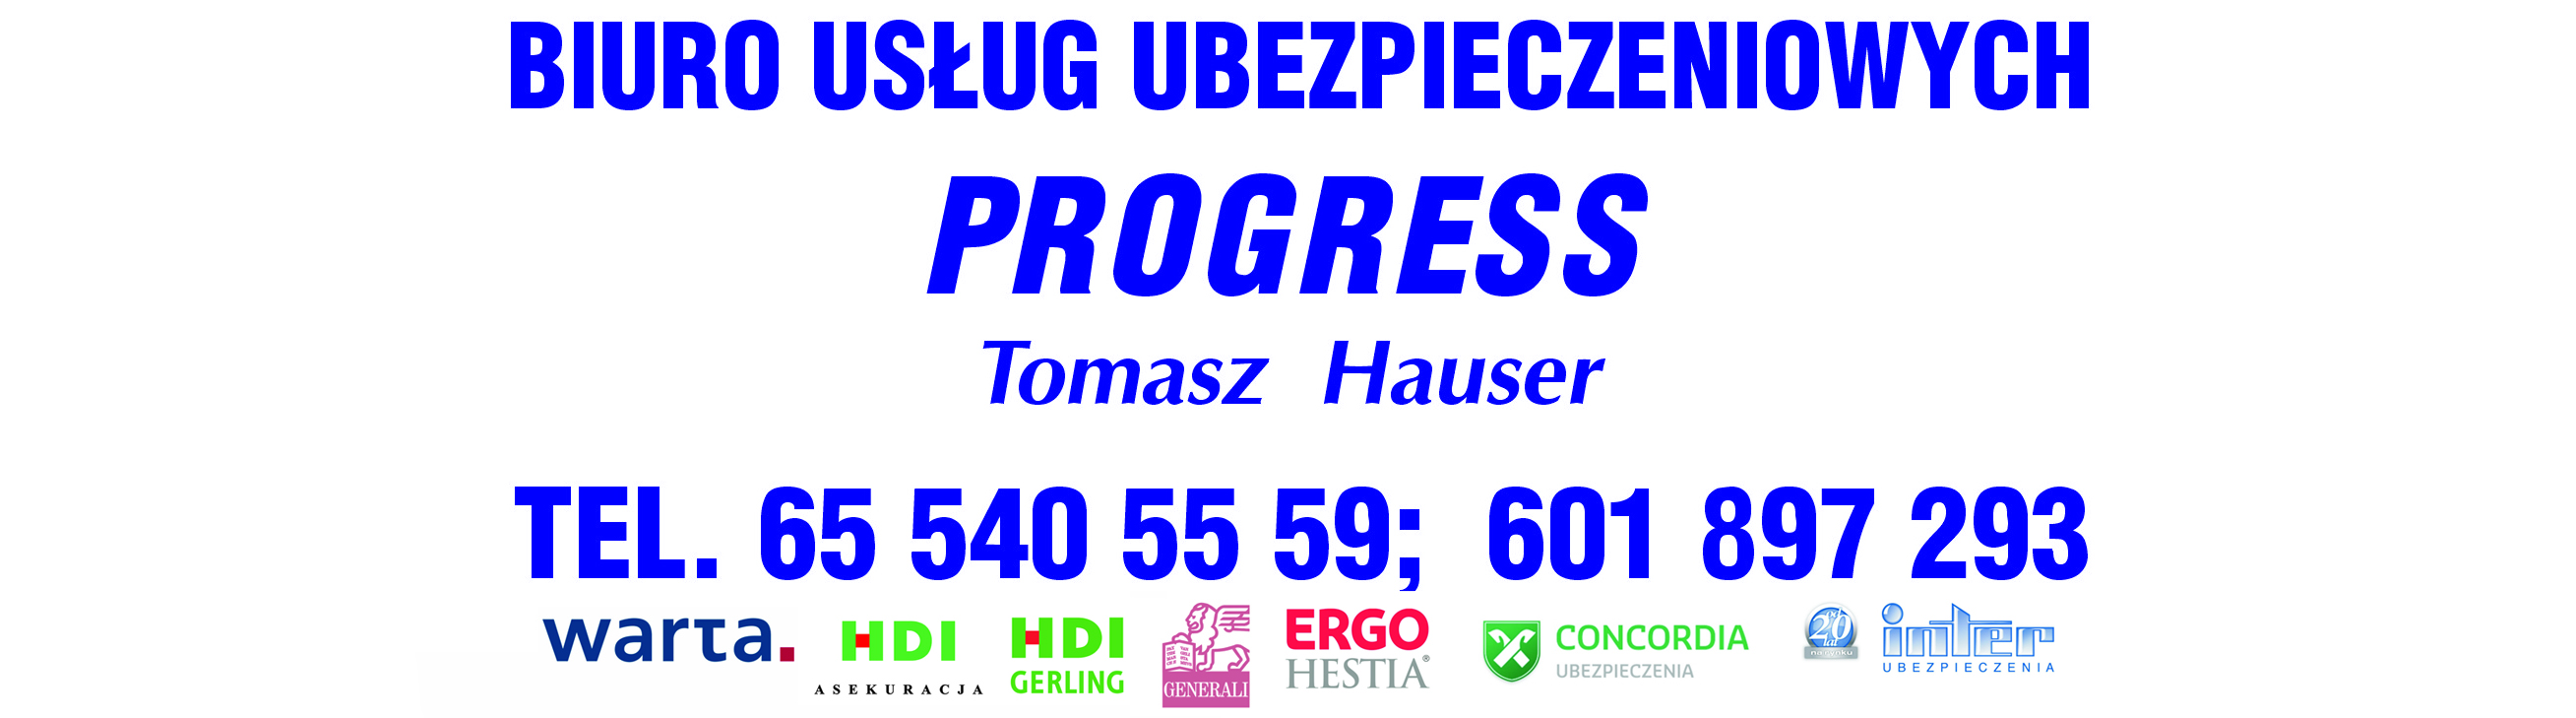 PROGRESS TOMASZ HAUSER